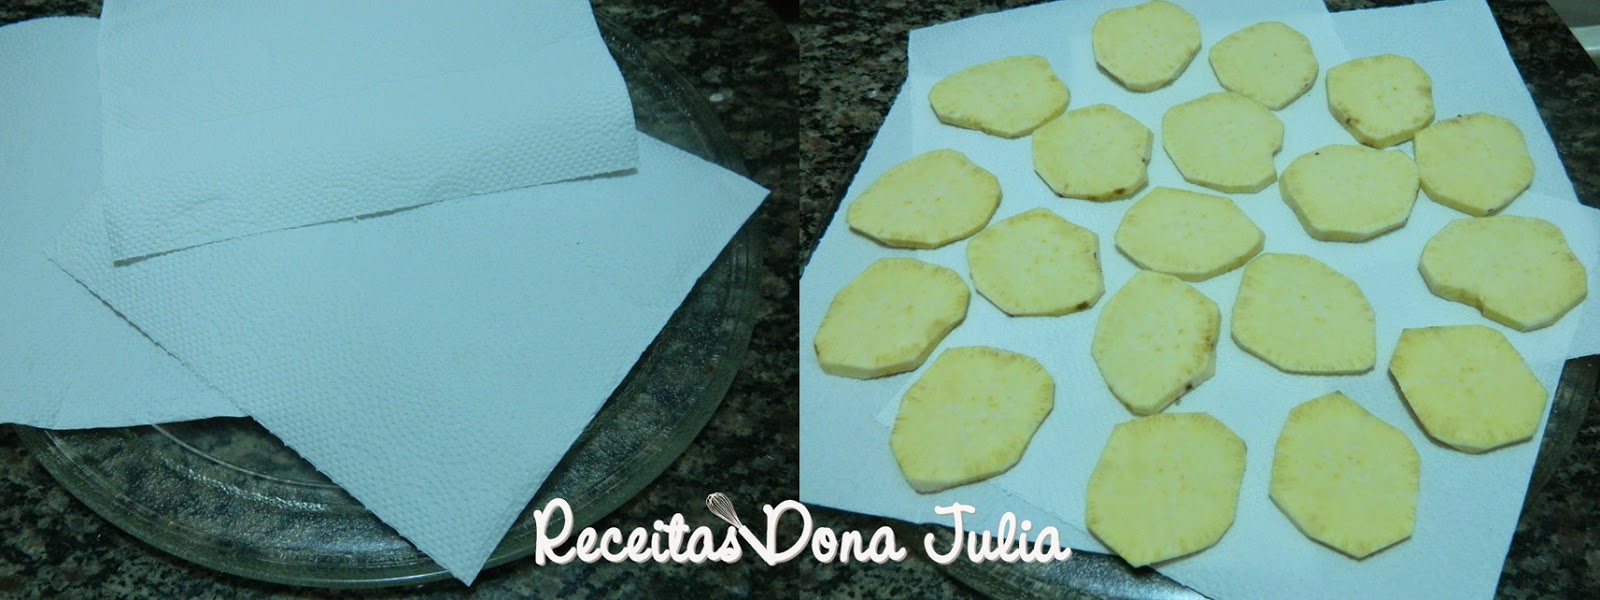 Chips de batata doce no microondas